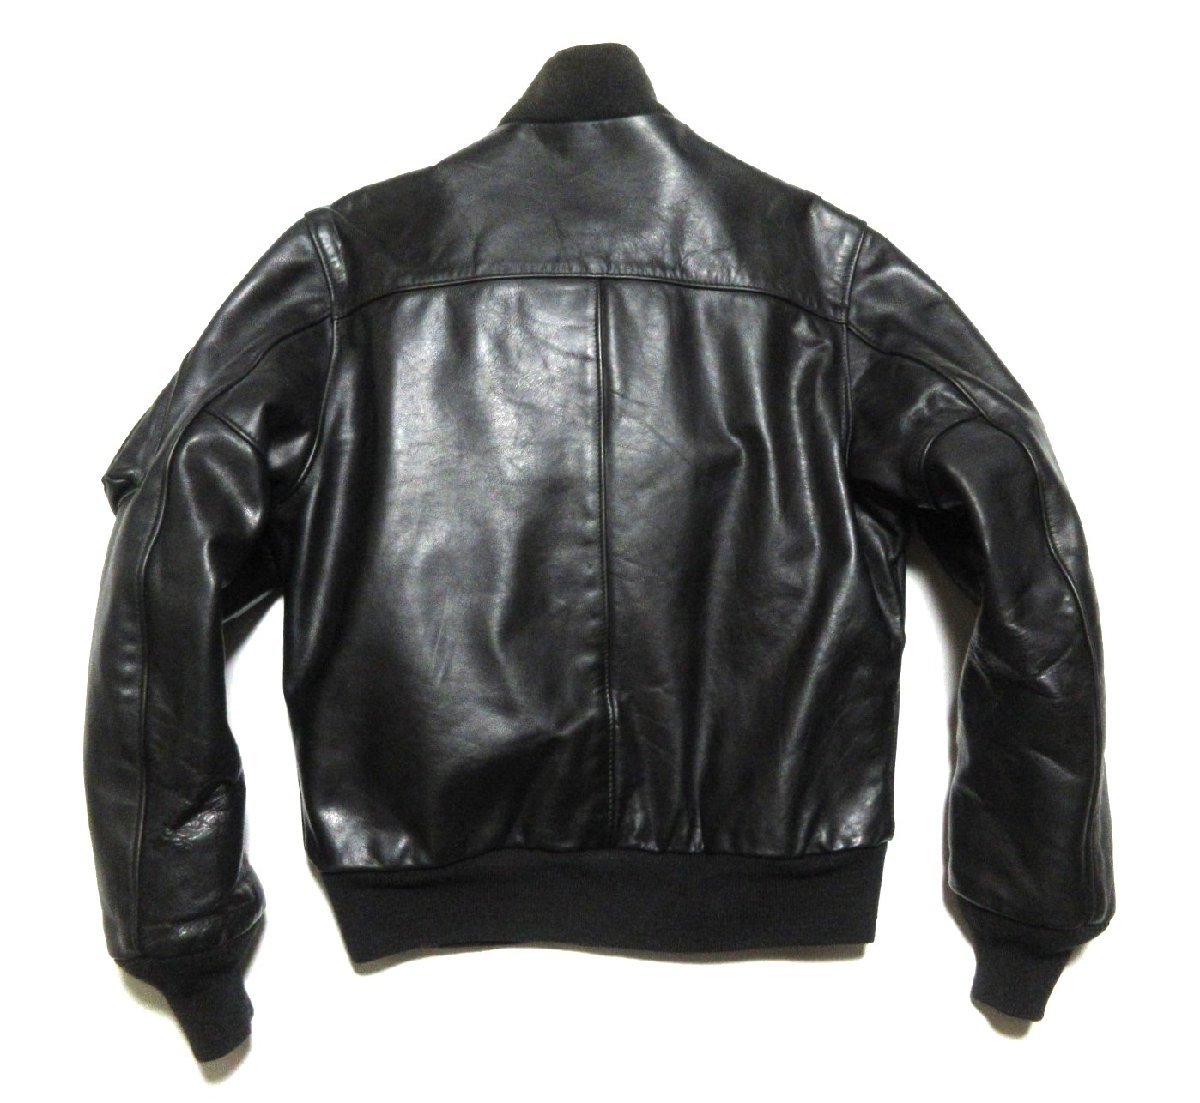  ultimate beautiful goods Schott.N.Y.C 127 Schott leather MA-1 flight jacket / Rider's /36/ black /USA/ America / American made 